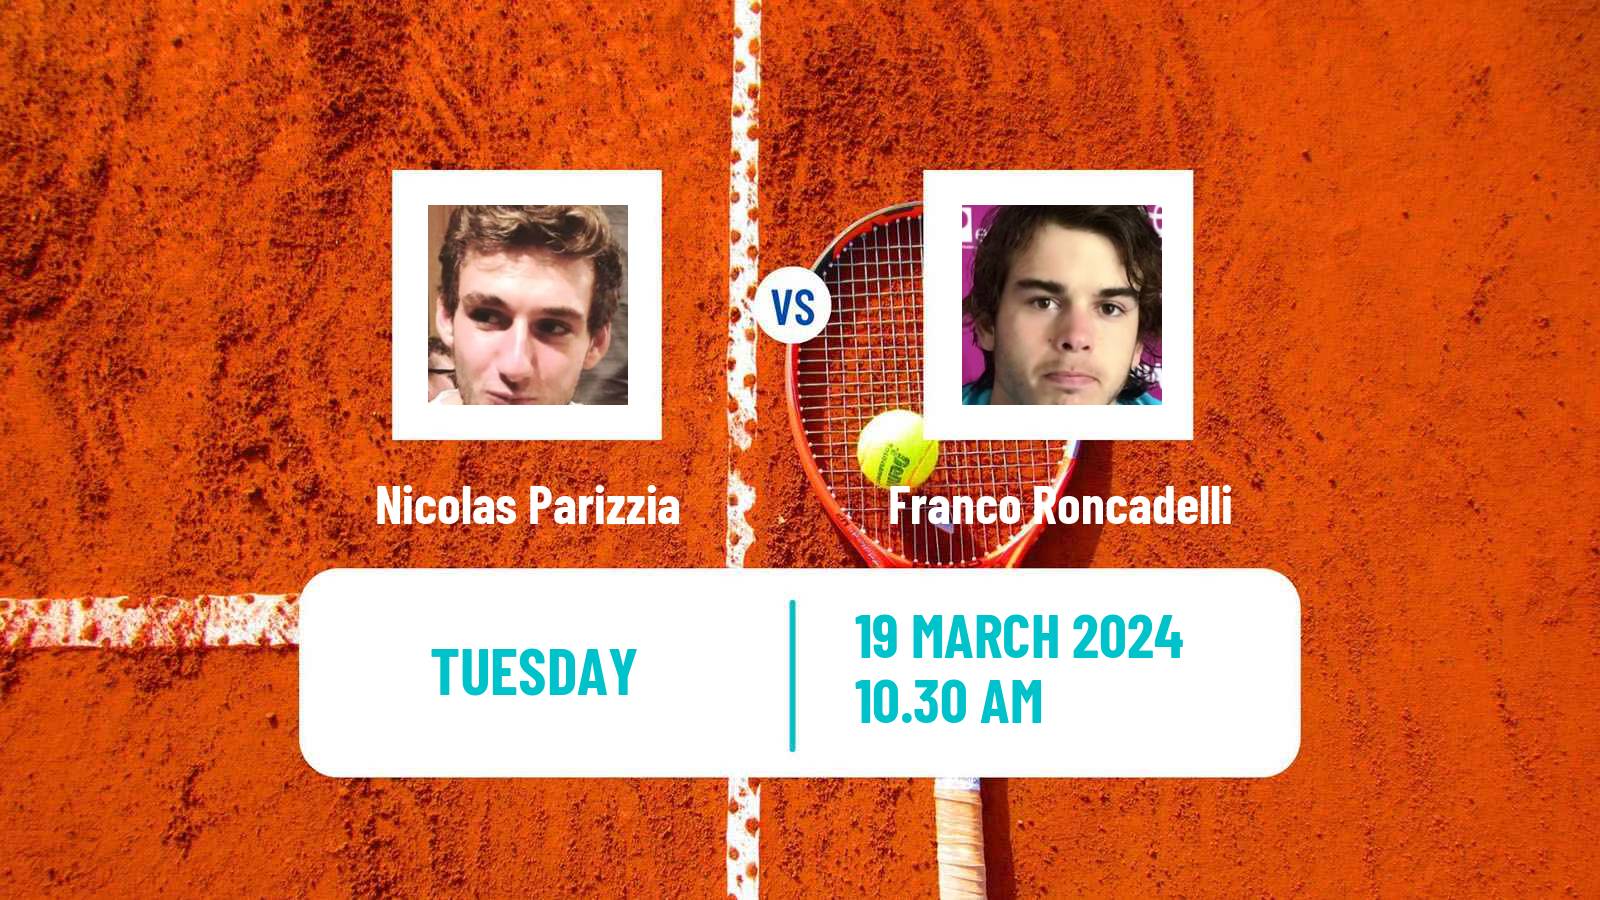 Tennis ITF M15 Punta Del Este 2 Men Nicolas Parizzia - Franco Roncadelli